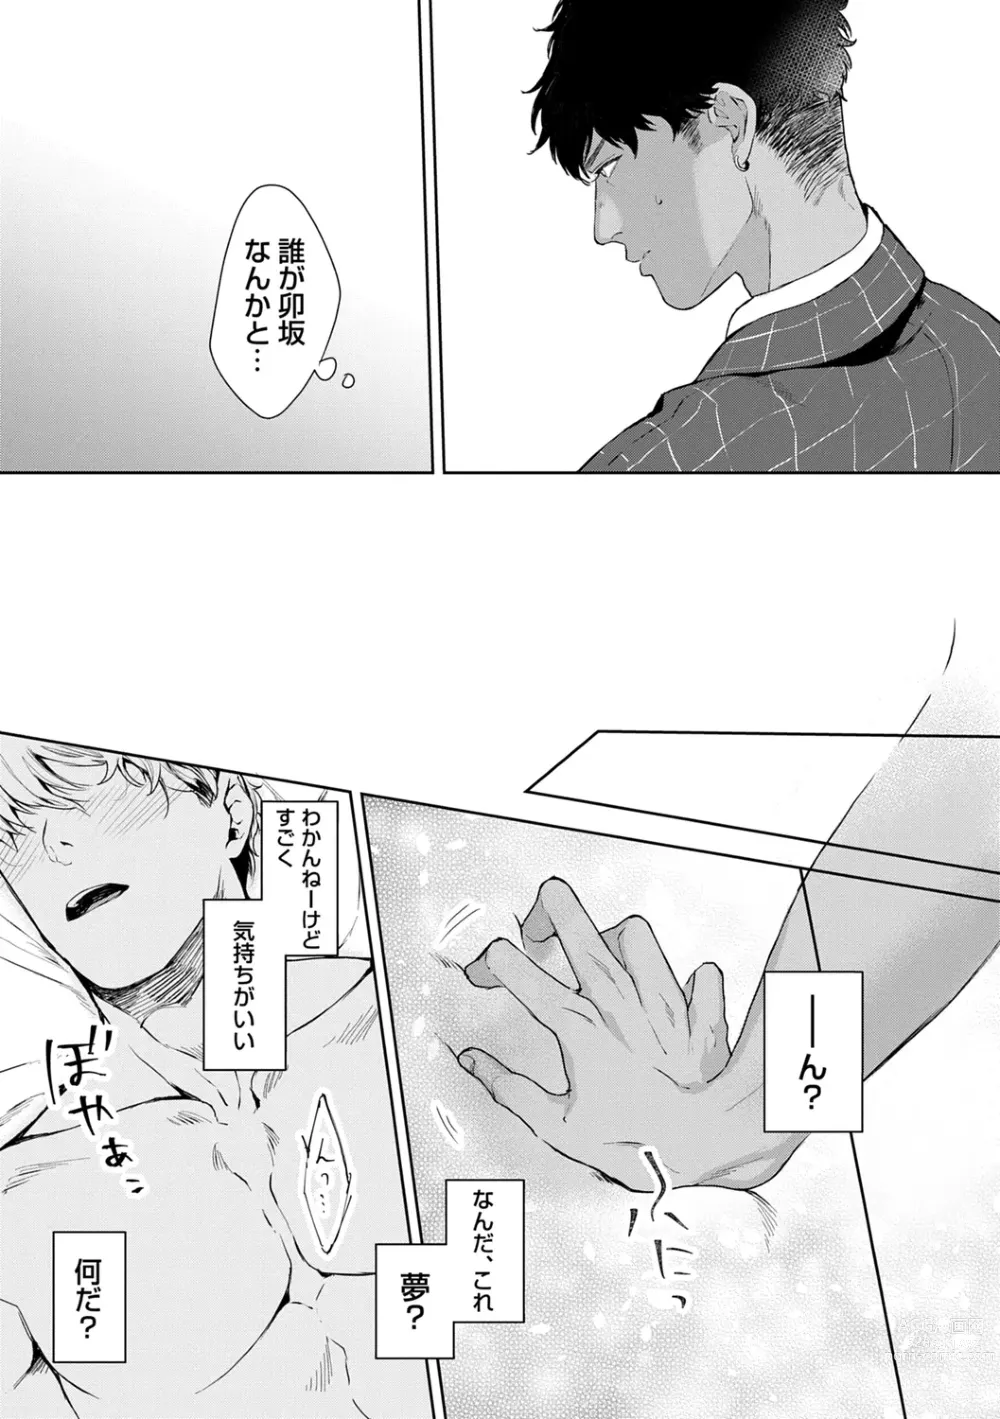 Page 9 of manga Iyarashii Mannequin ~Gachimuchi Suit Seiyoku Zukan~